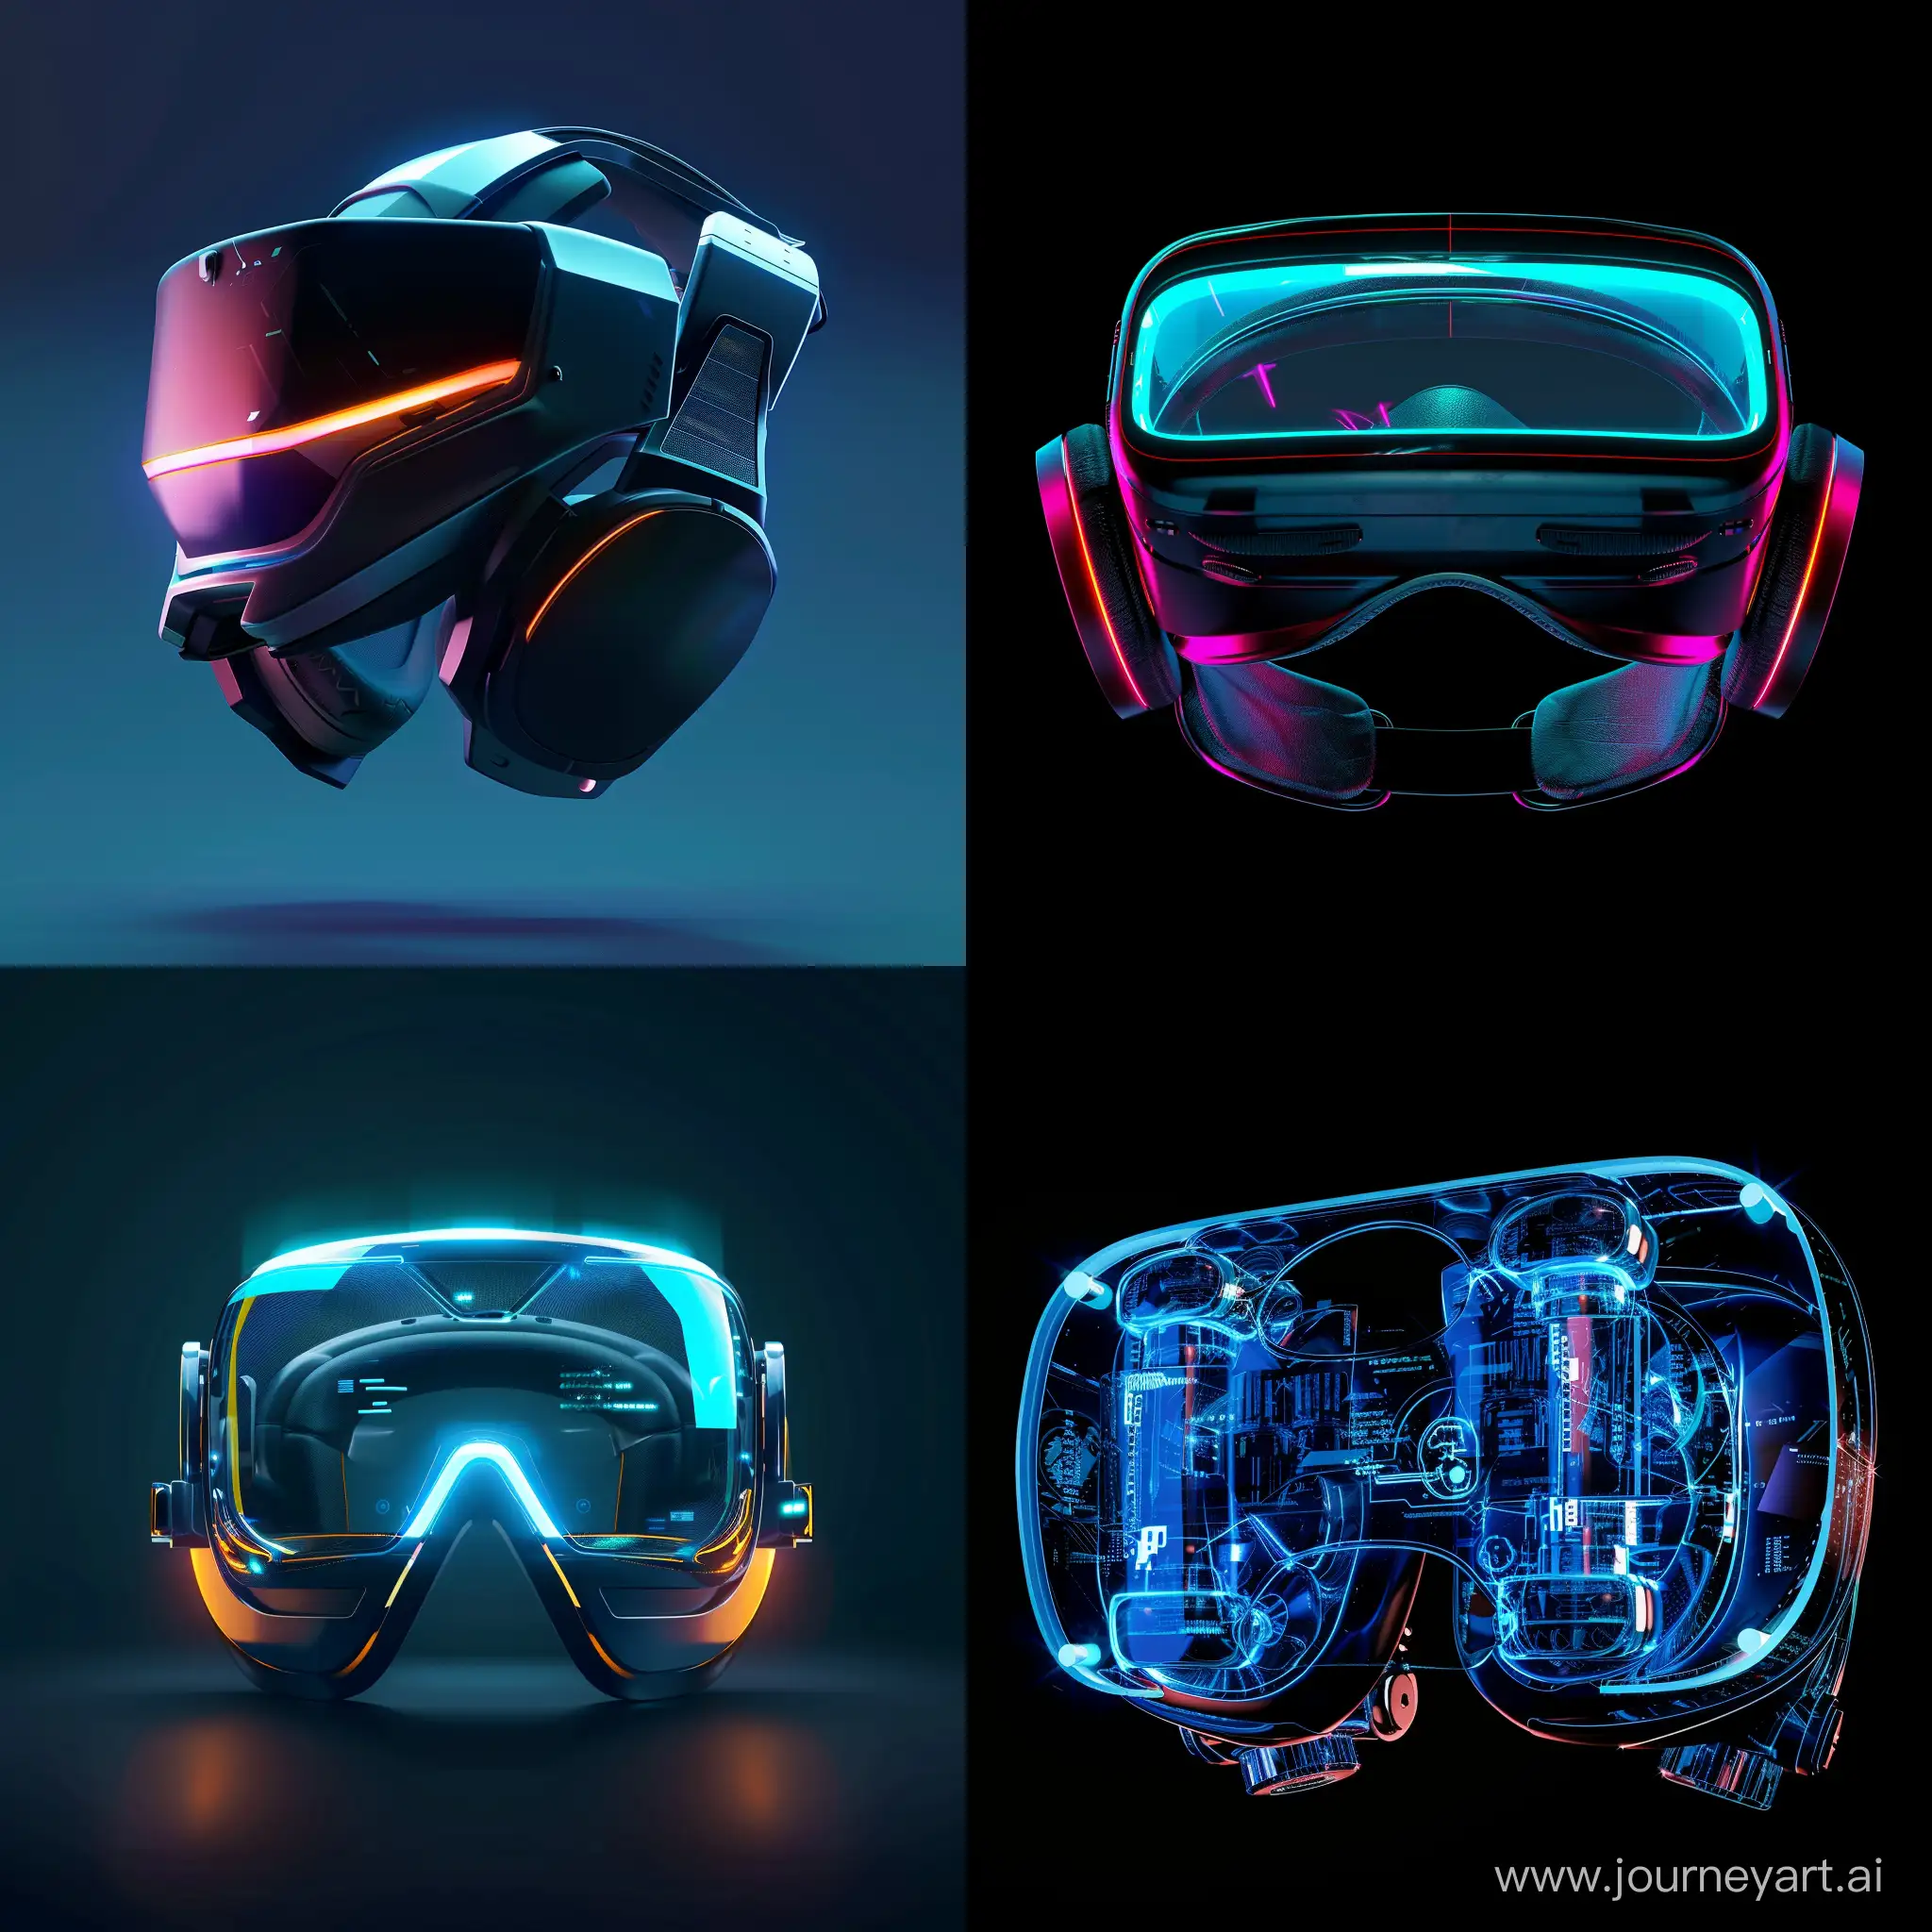 Futuristic-Cyberpunk-VR-Headset-Immersive-Technology-Innovation